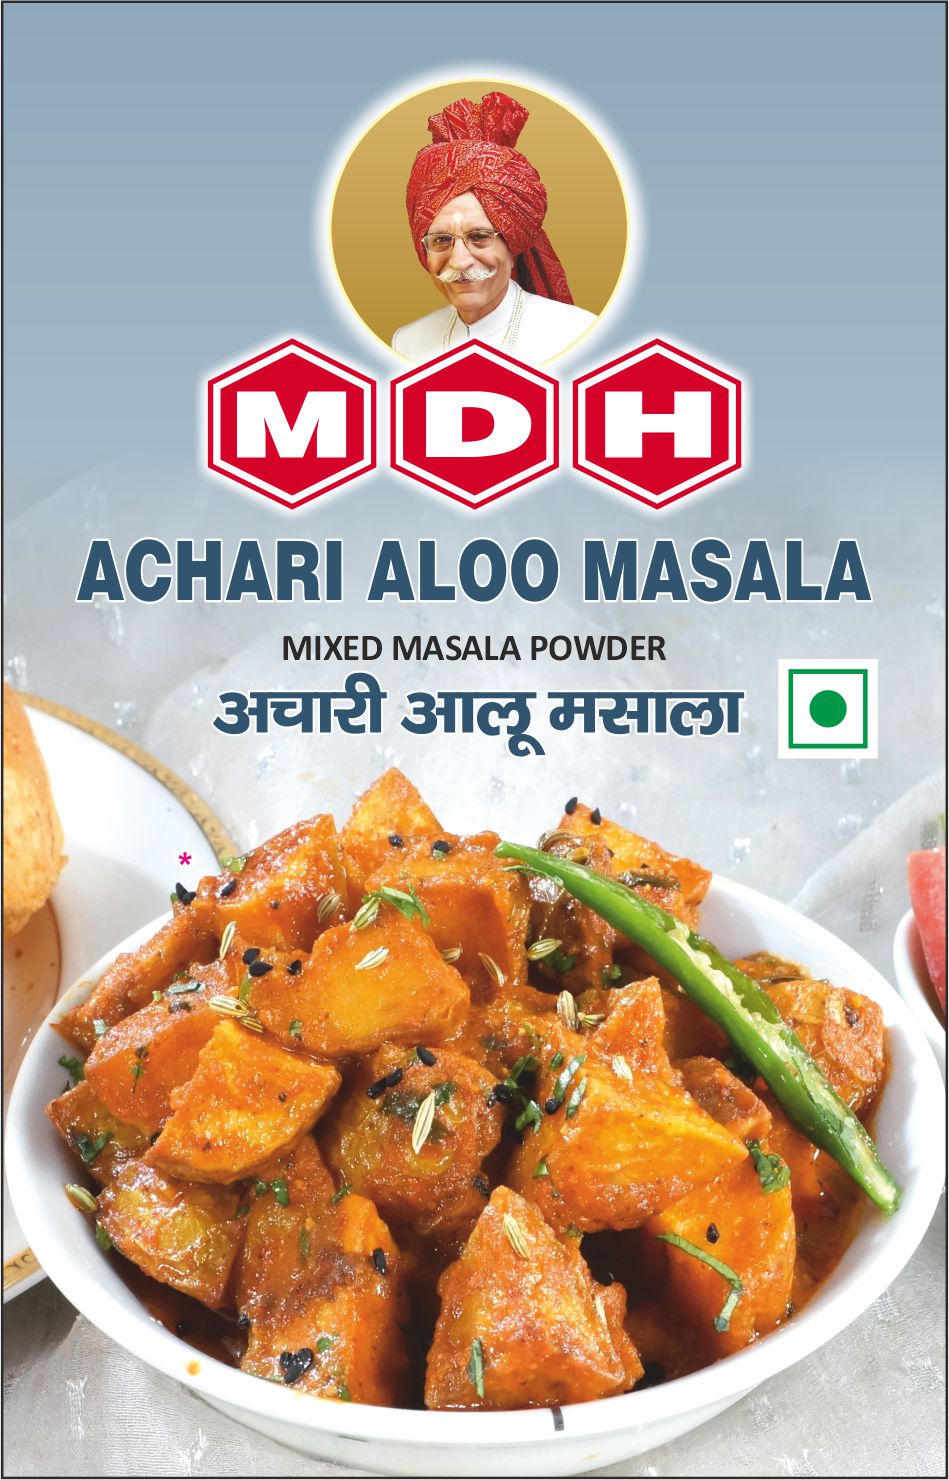 MDH-Achari Aloo Masala-50g